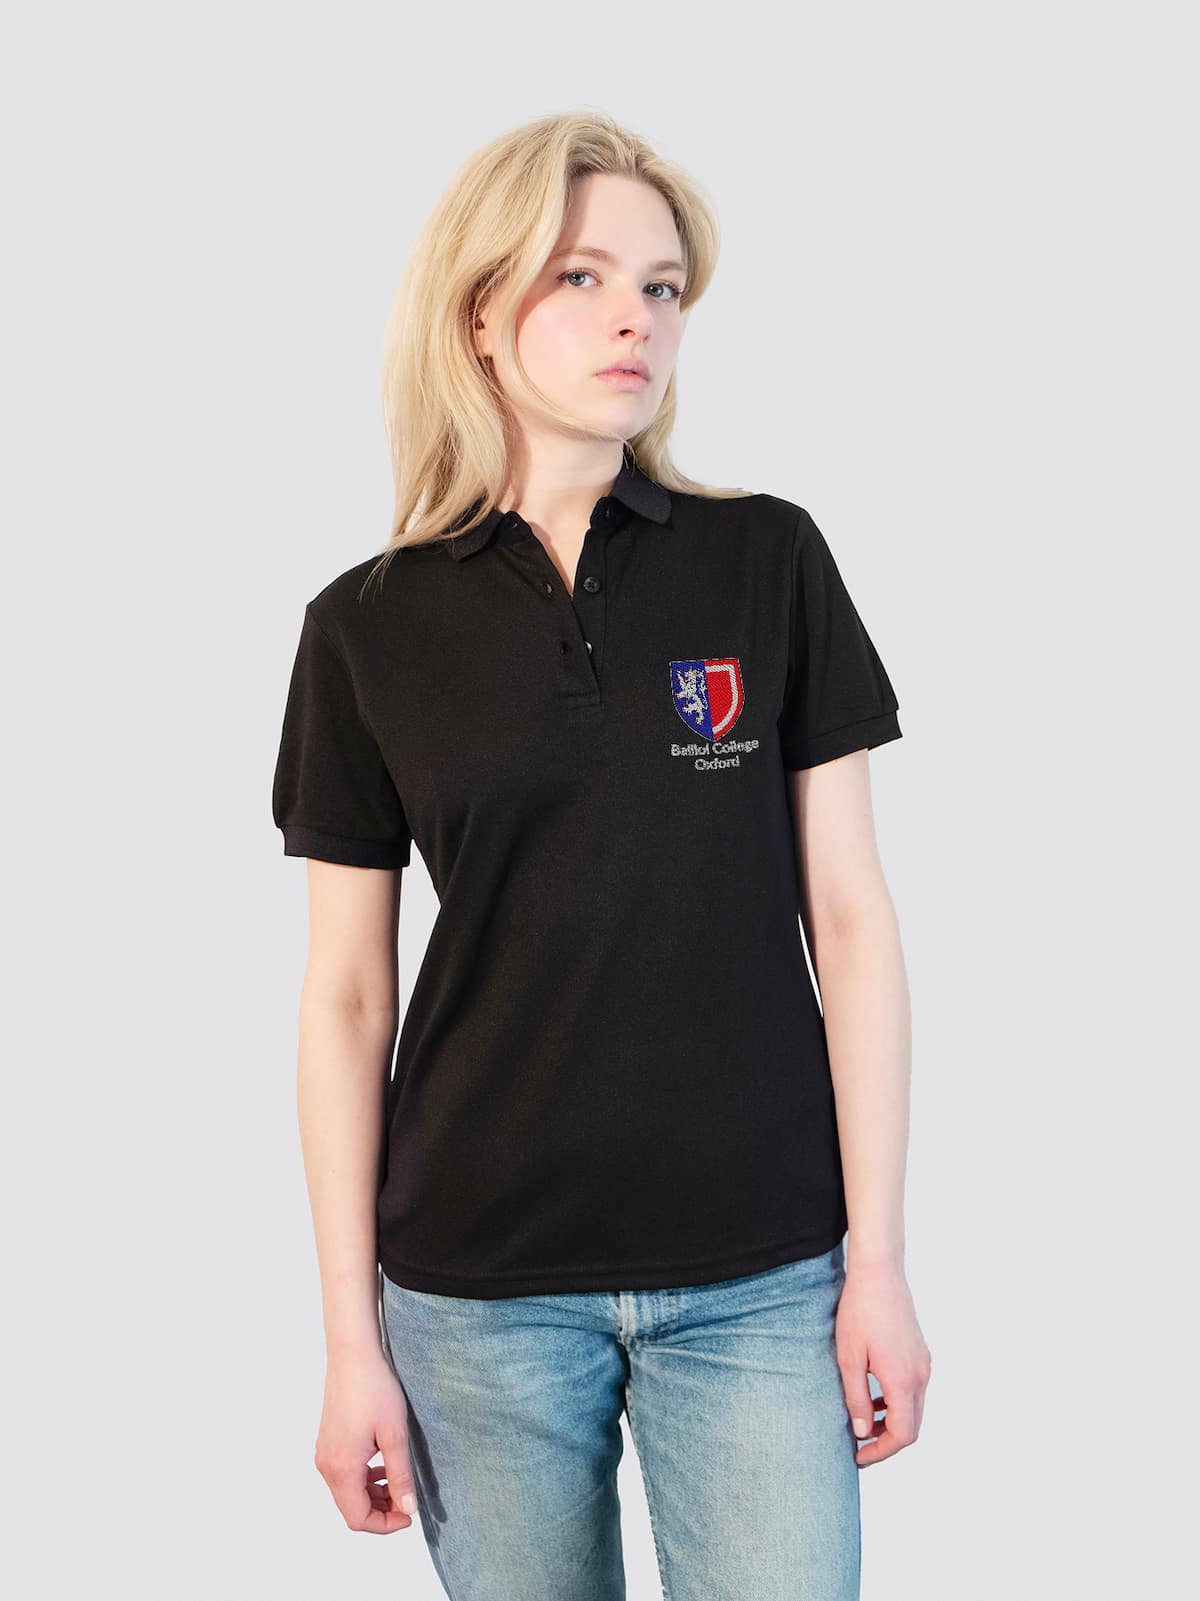 Balliol College Oxford Sustainable Ladies Polo Shirt